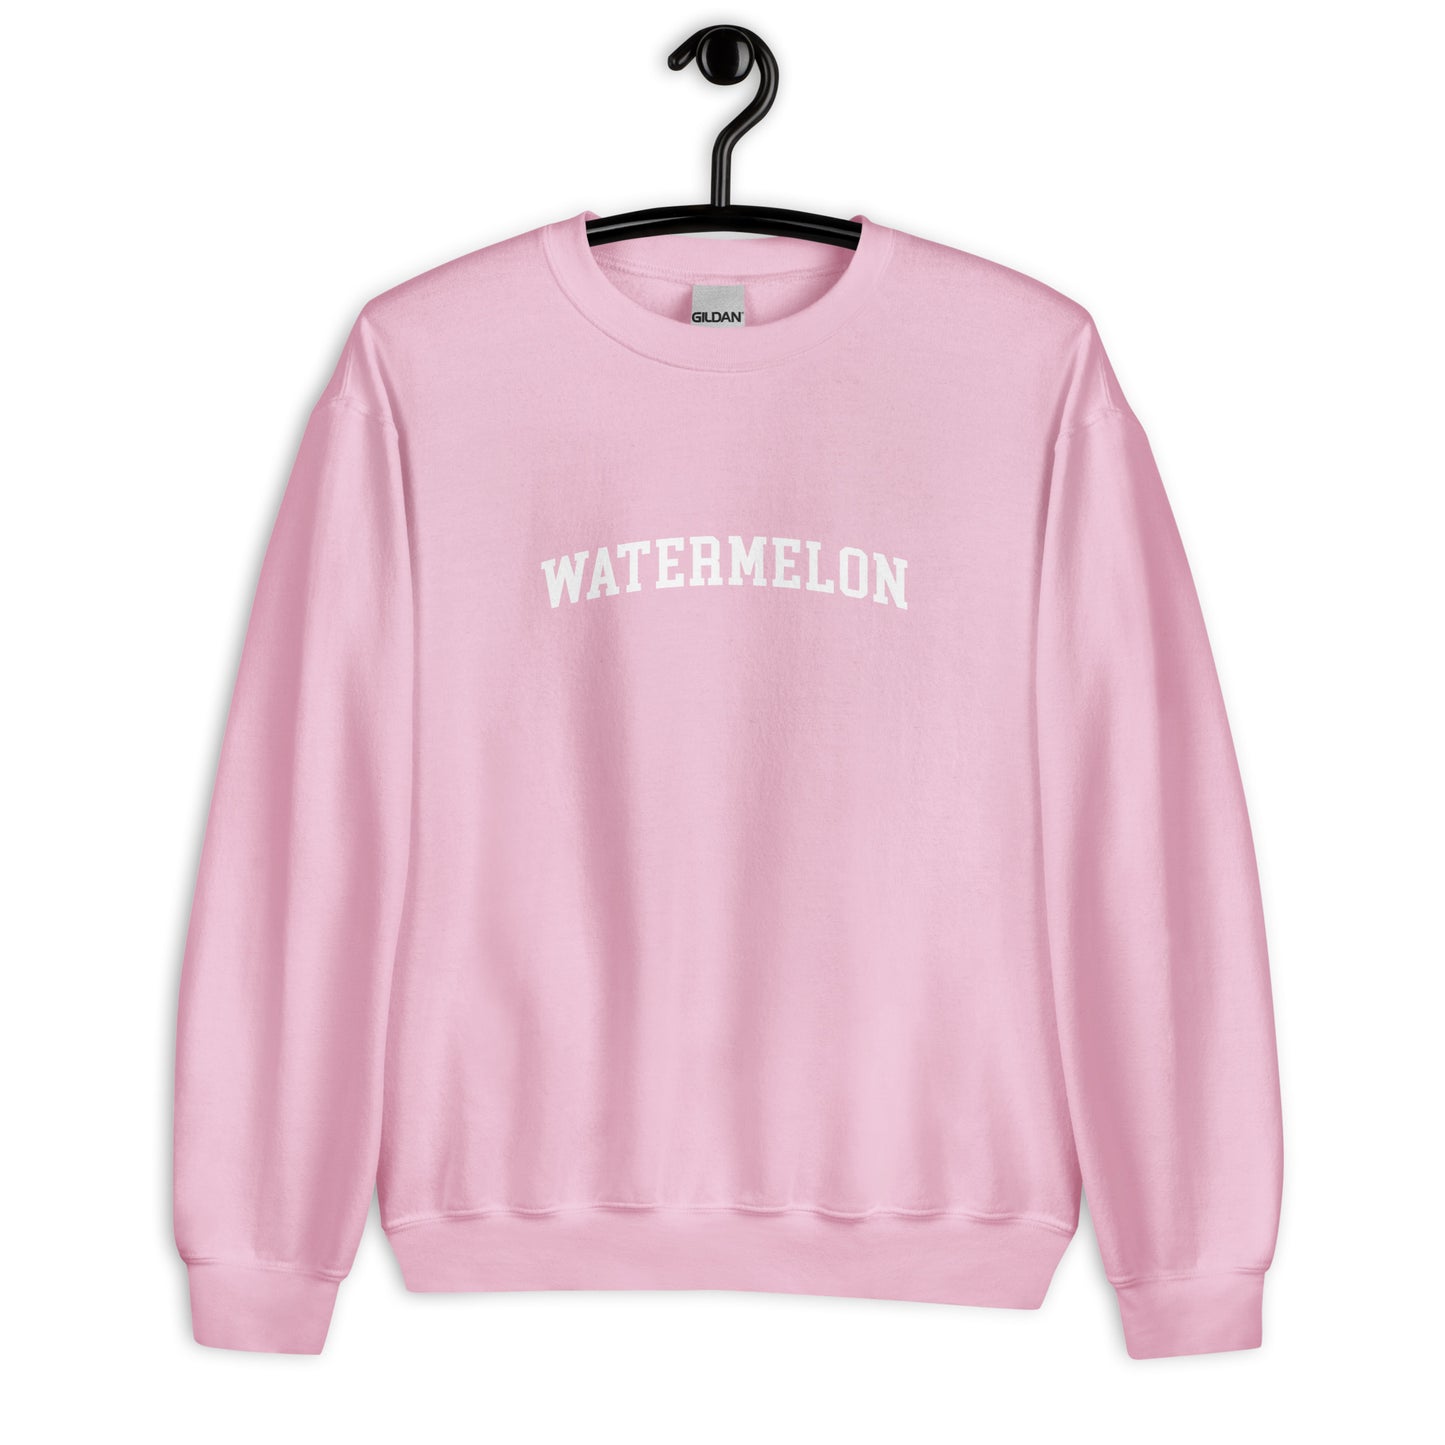 Watermelon Sweatshirt - Arched Font